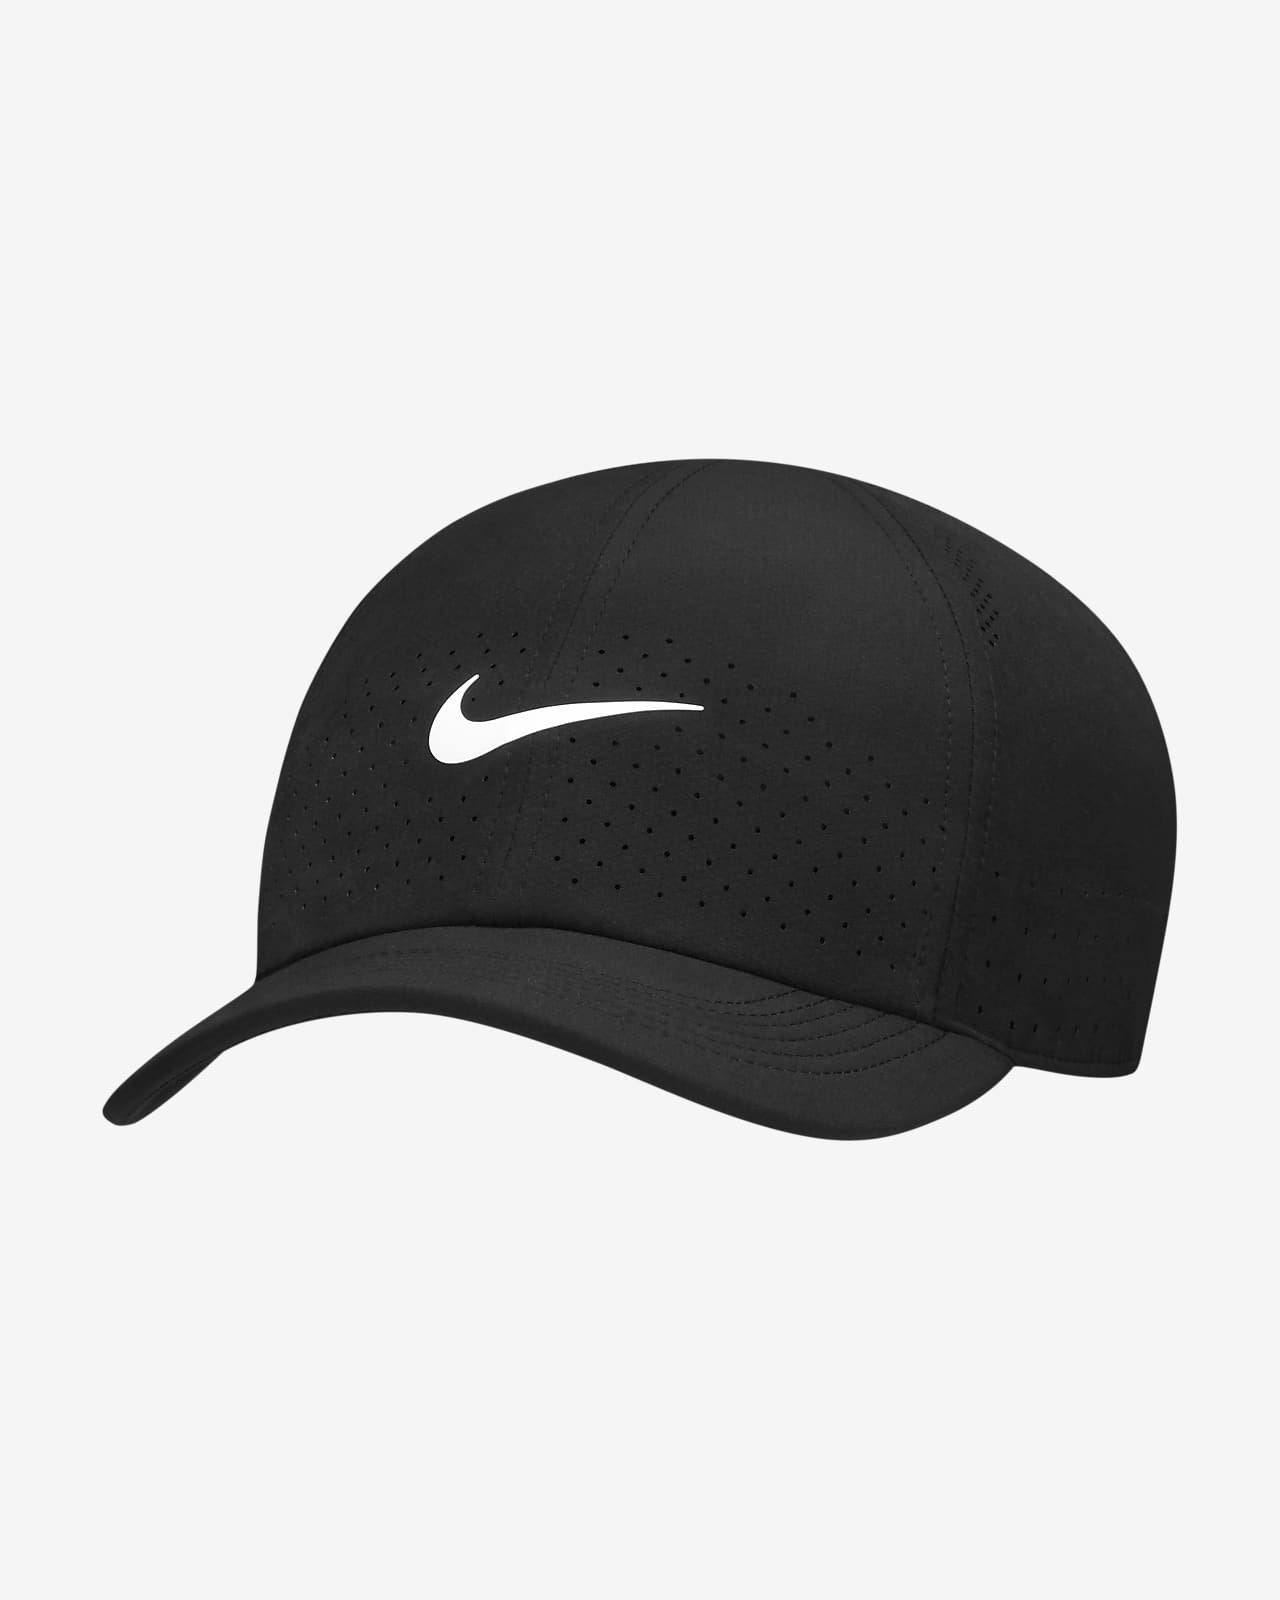 NikeCourt AeroBill Advantage Tennis Cap